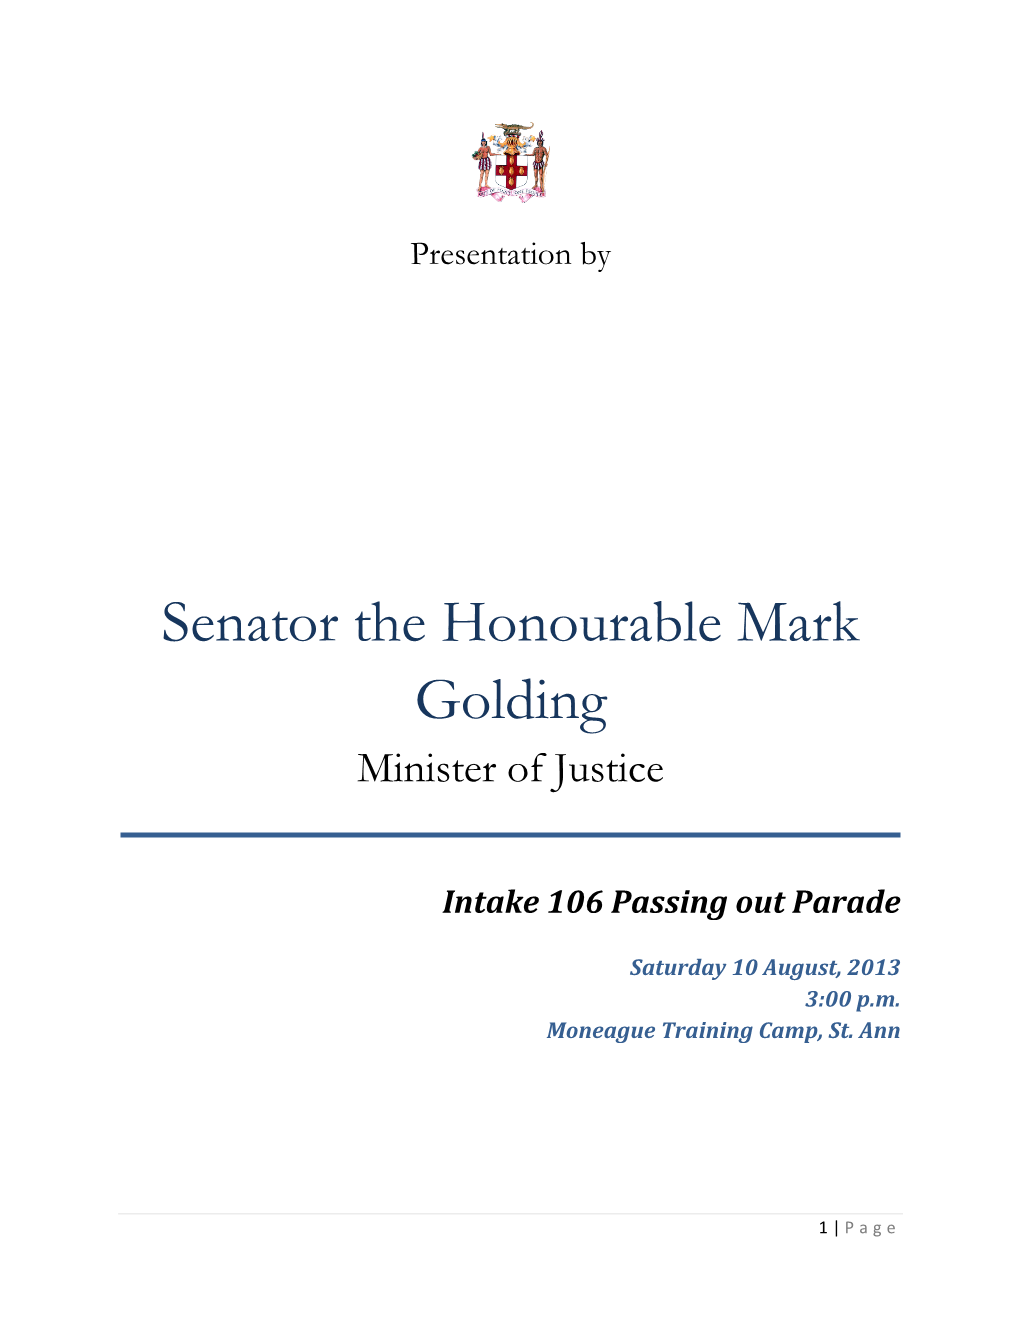 Senator the Honourable Mark Golding Minister of Justice